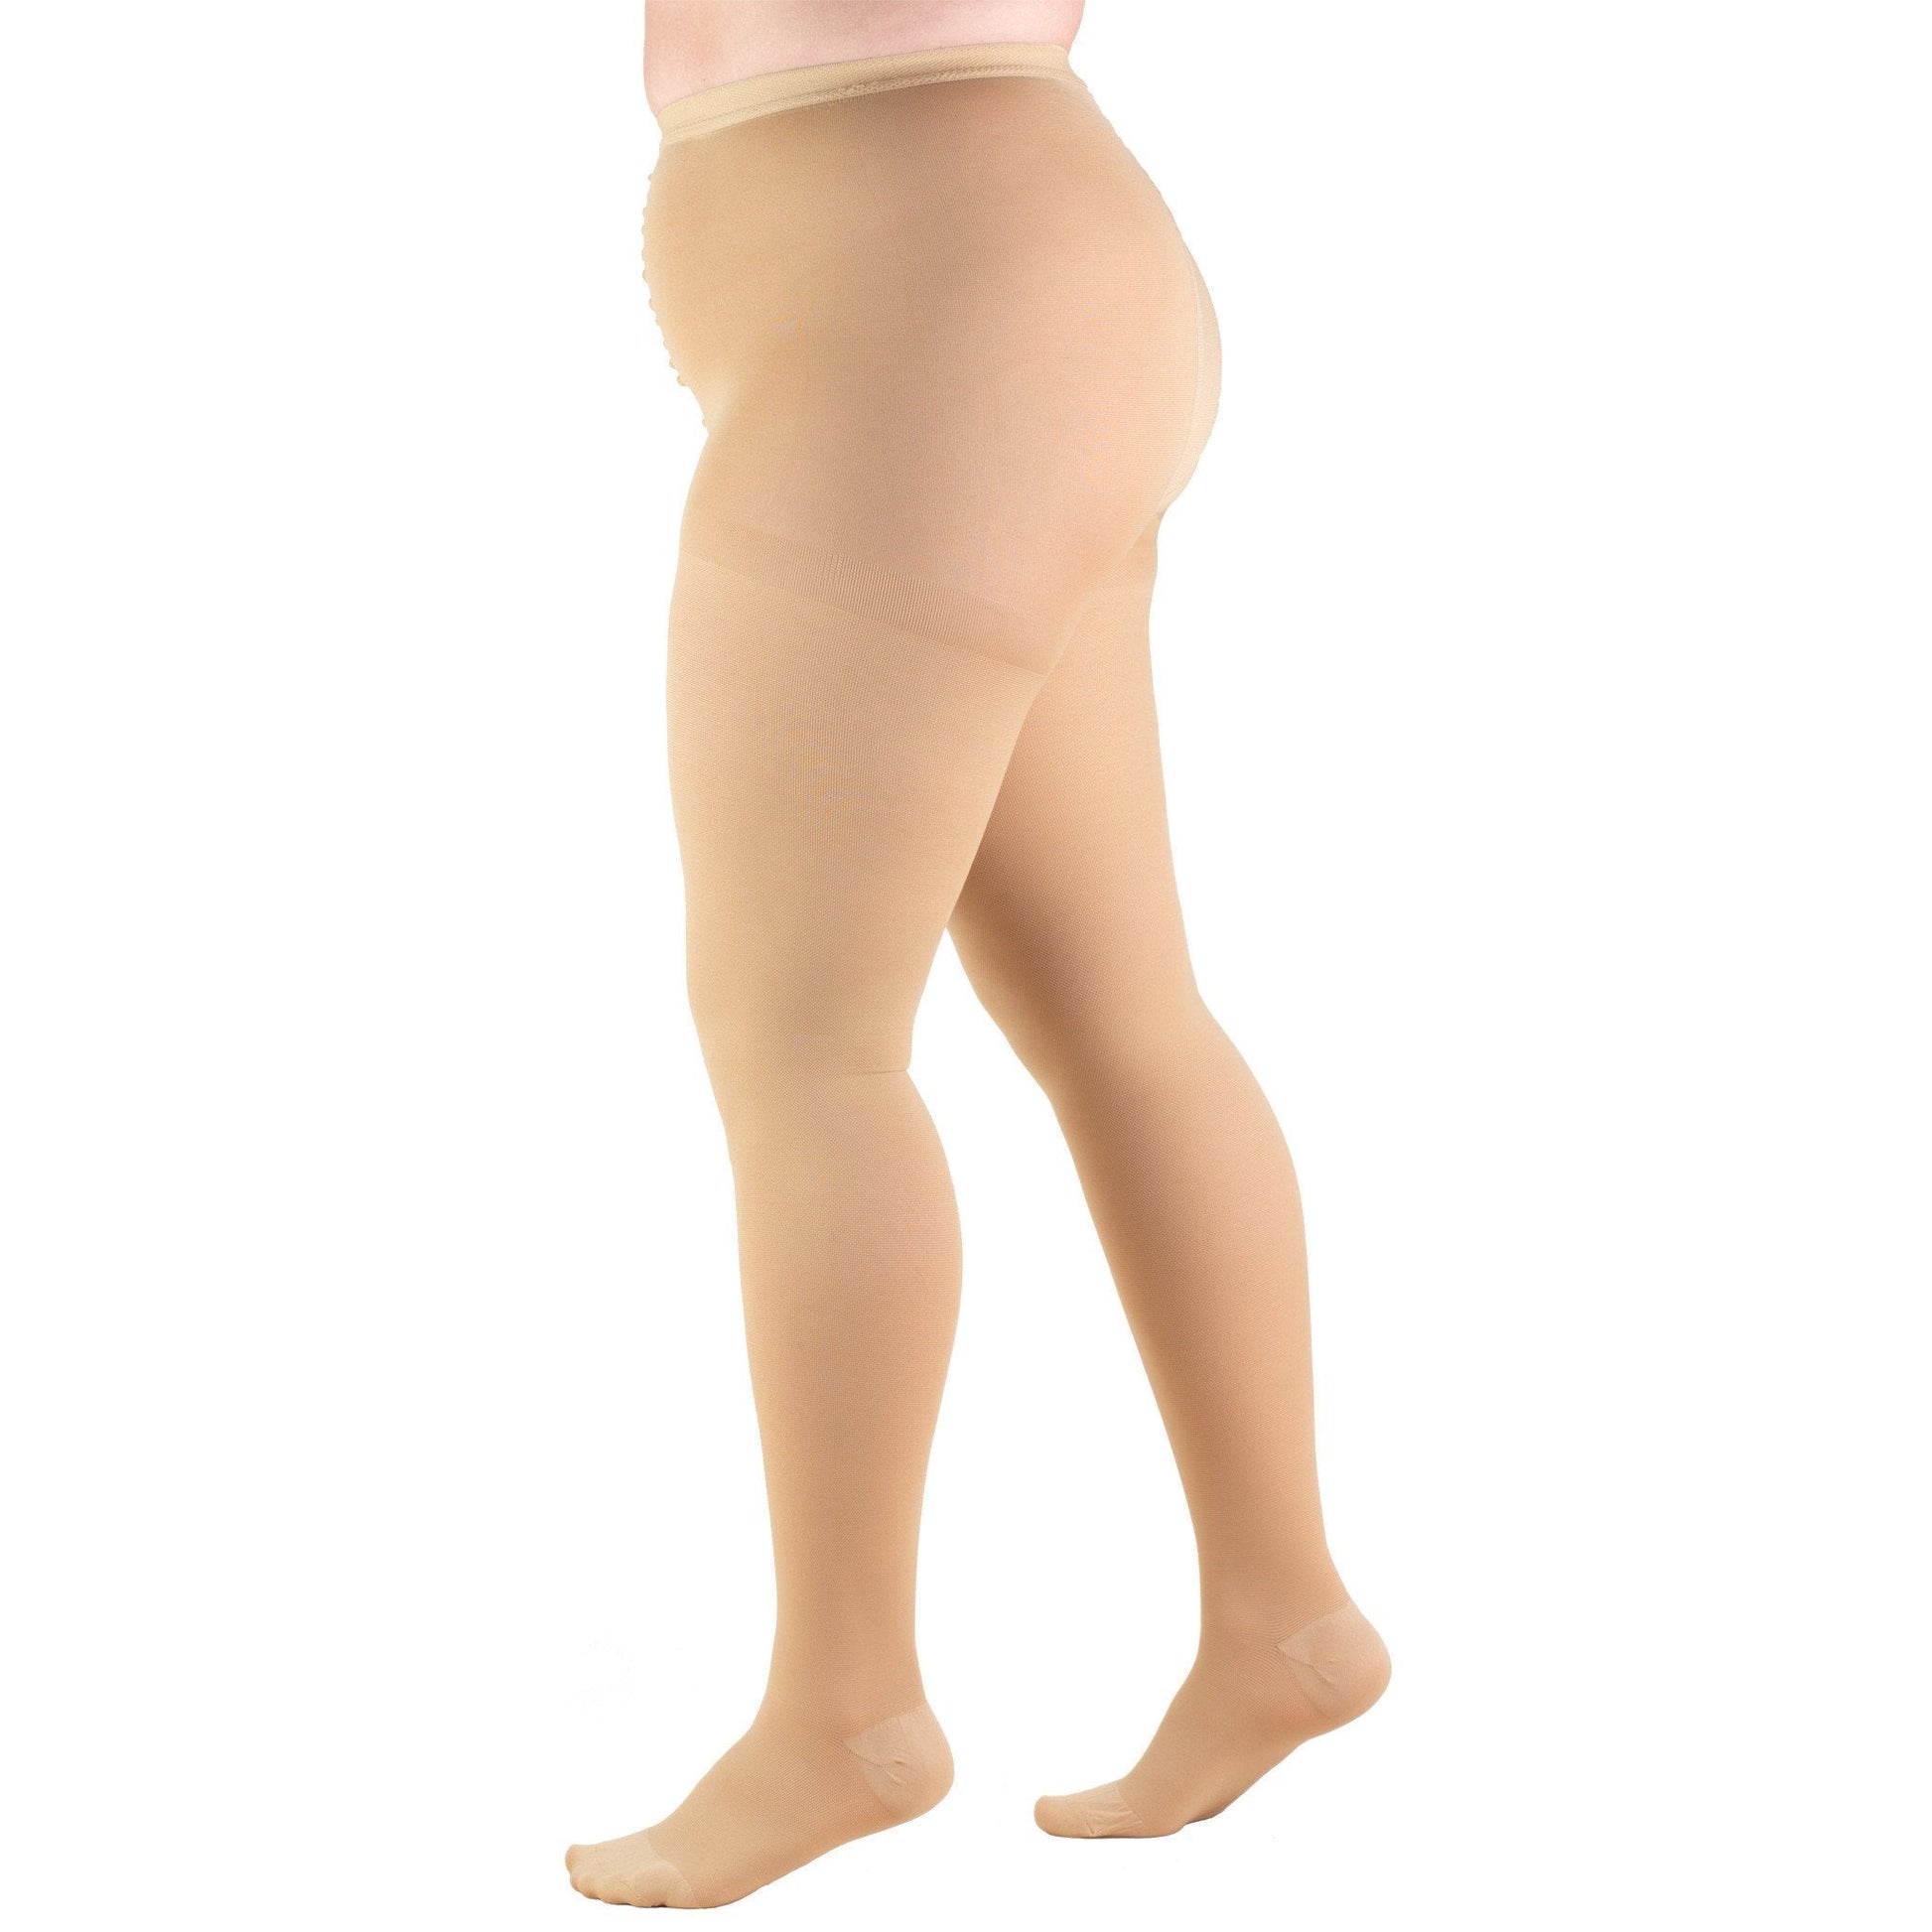 TRUFORM® Women's Pantyhose 20-30 mmHg, Plus Size – Compression Stockings